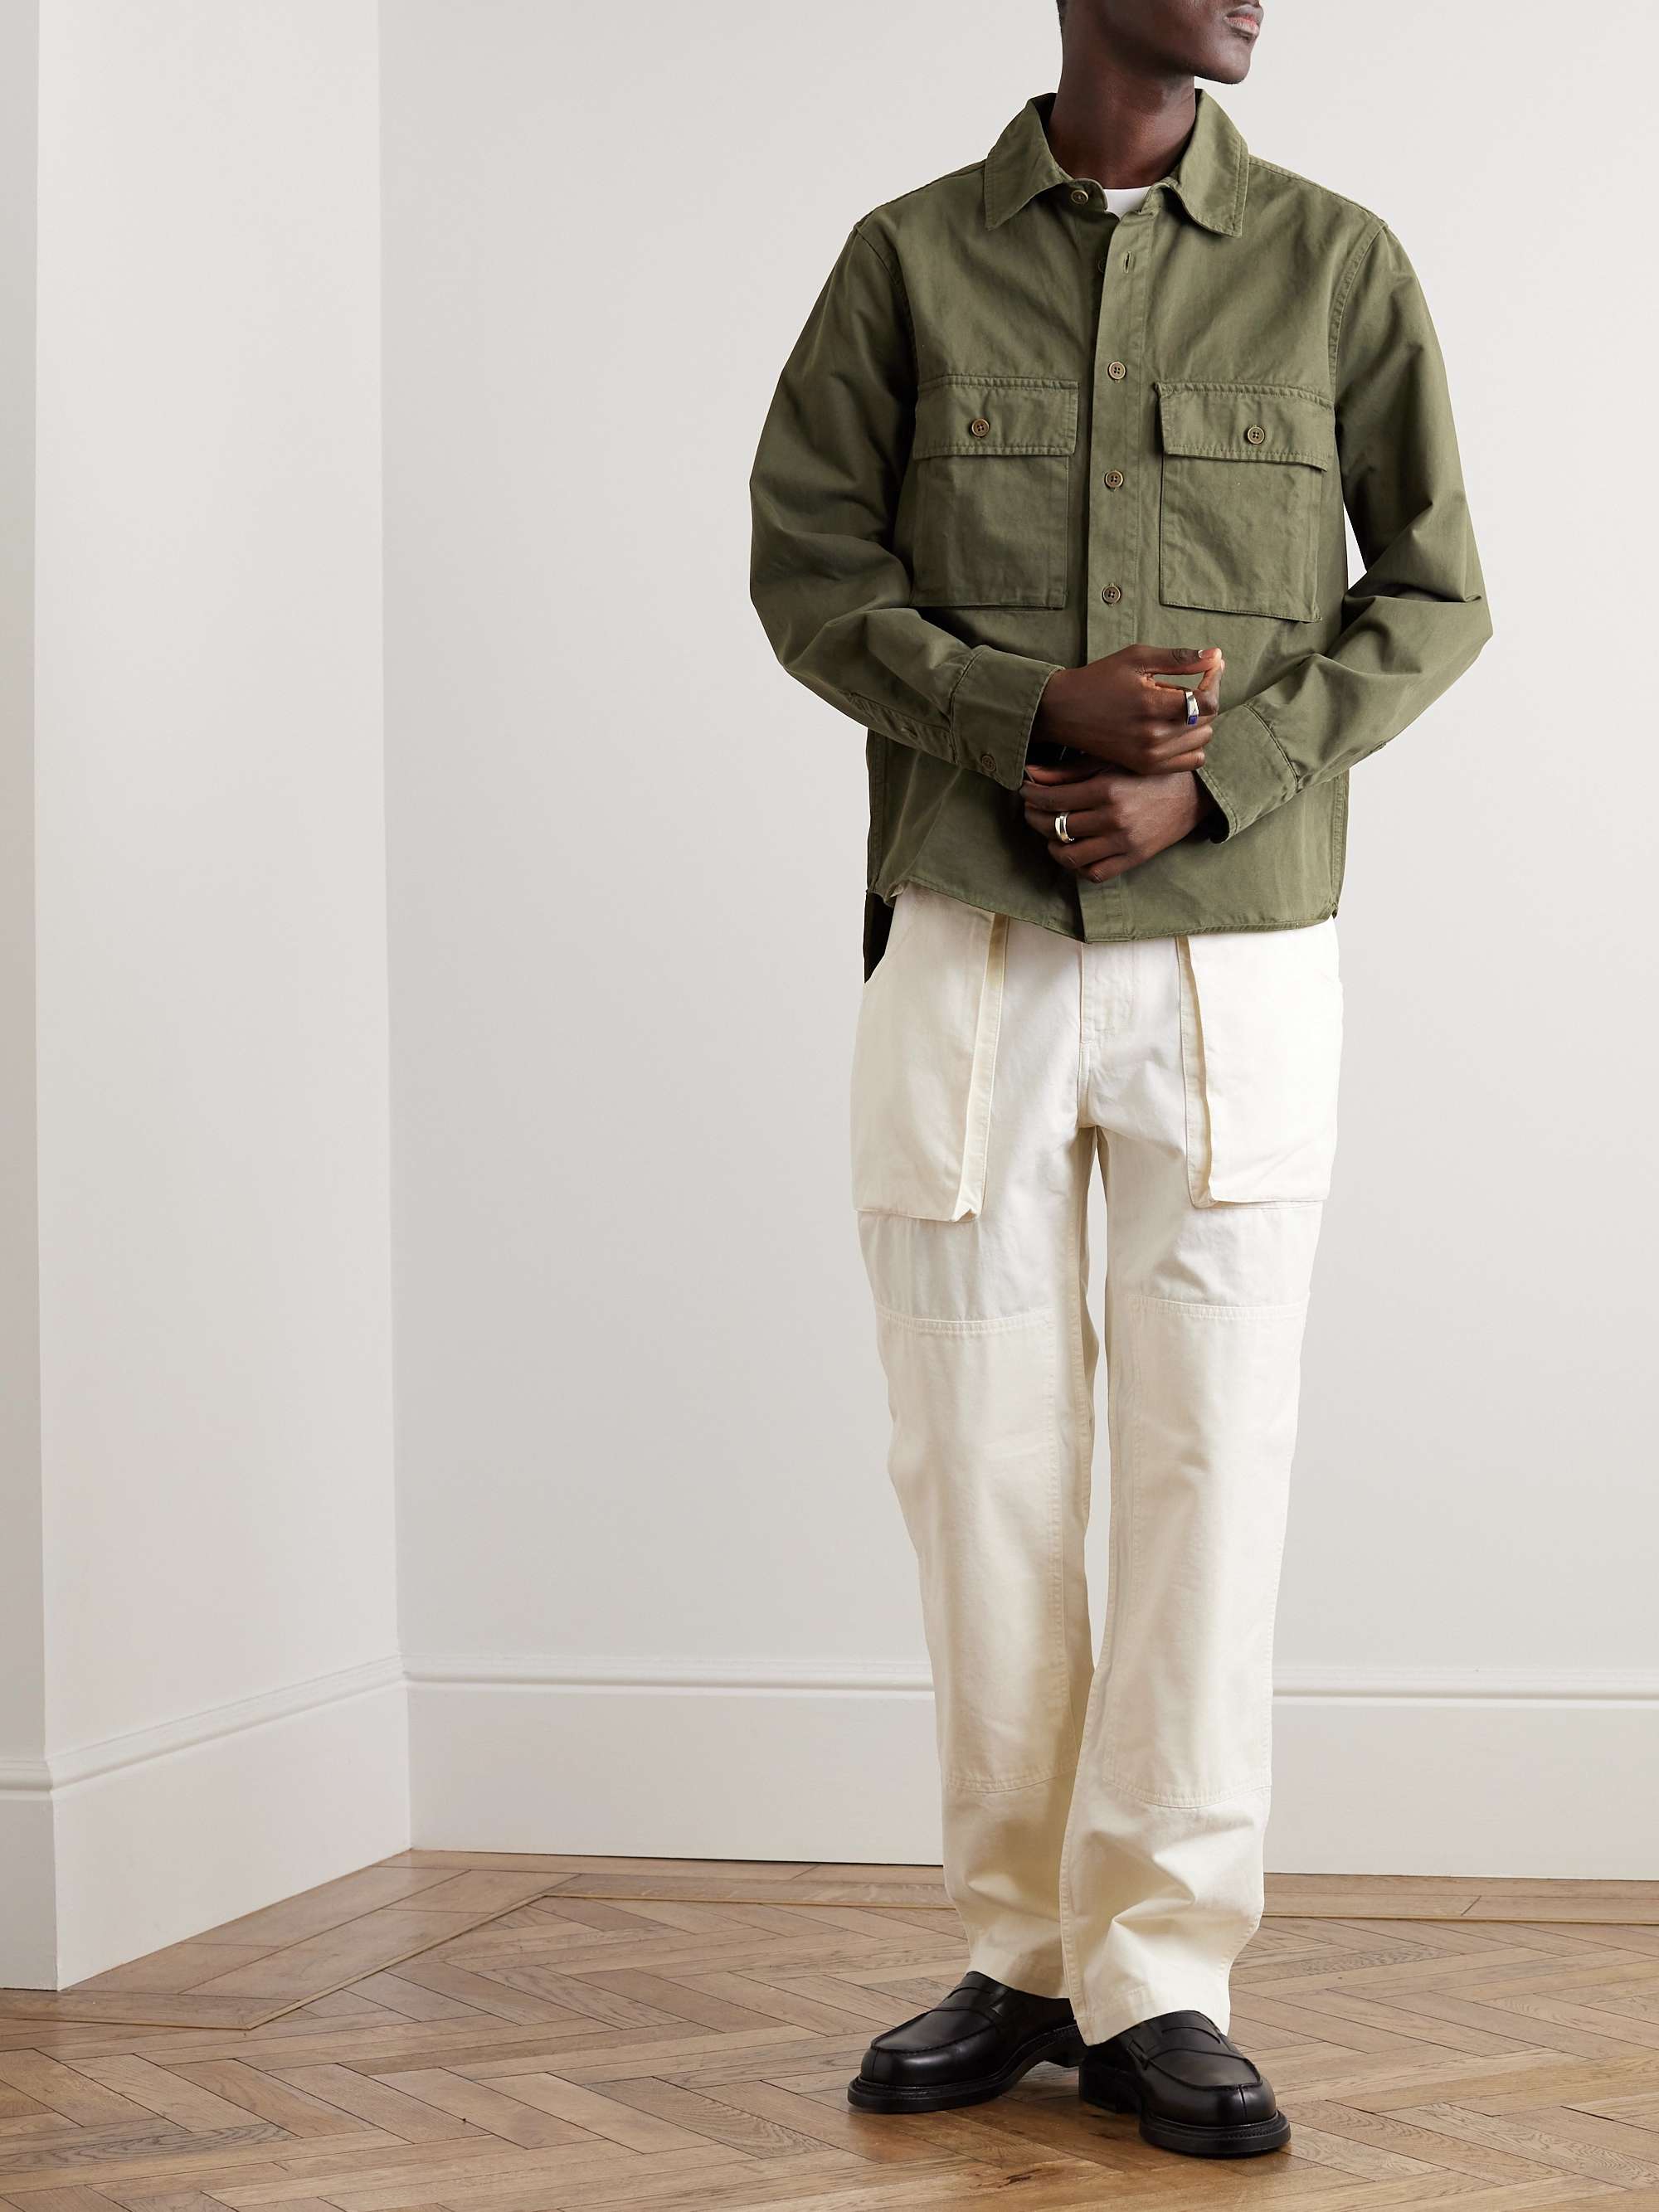 MILES LEON Bellow Garment-Dyed Organic Cotton-Twill Shirt